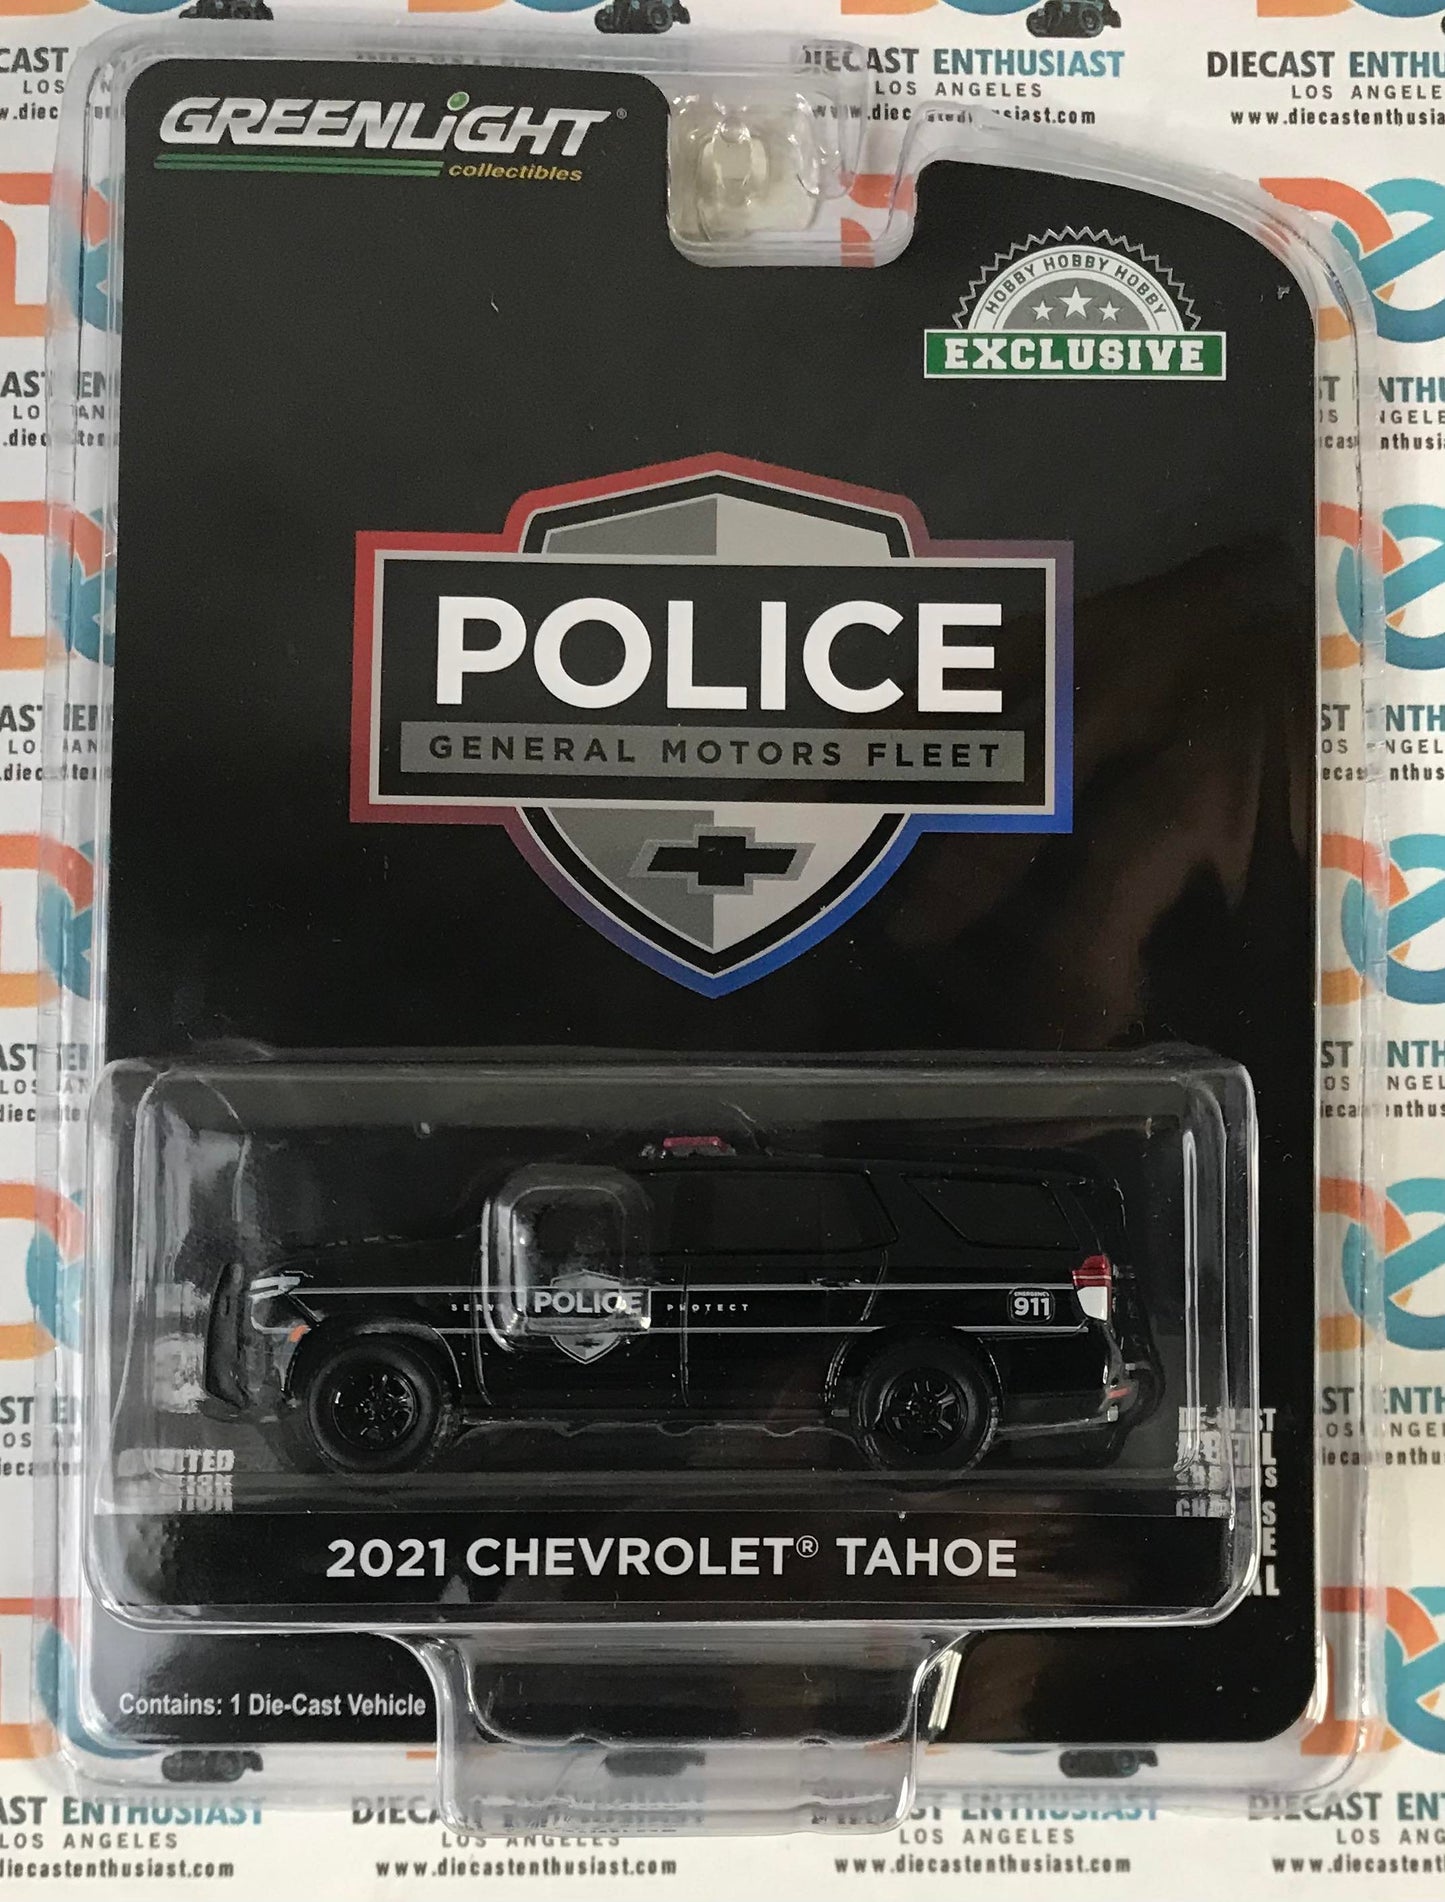 Greenlight Police General Motors Fleet 2020 Chevrolet Tahoe 1:64